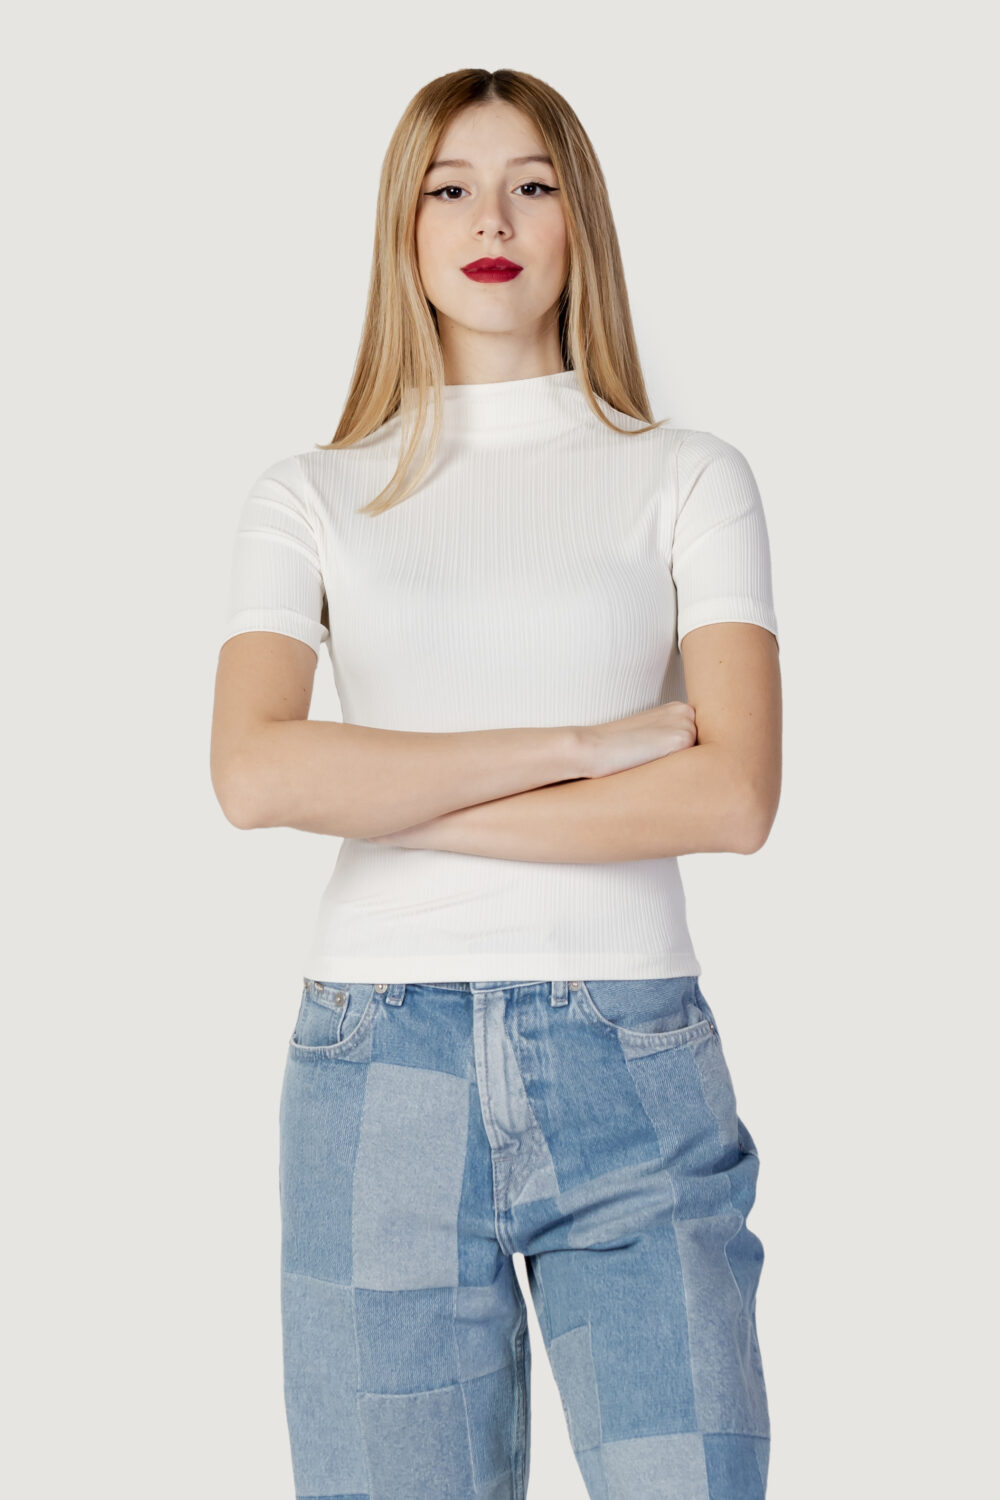 Maglia Calvin Klein Jeans SHINY RIB HIGH NECK Panna - Foto 1